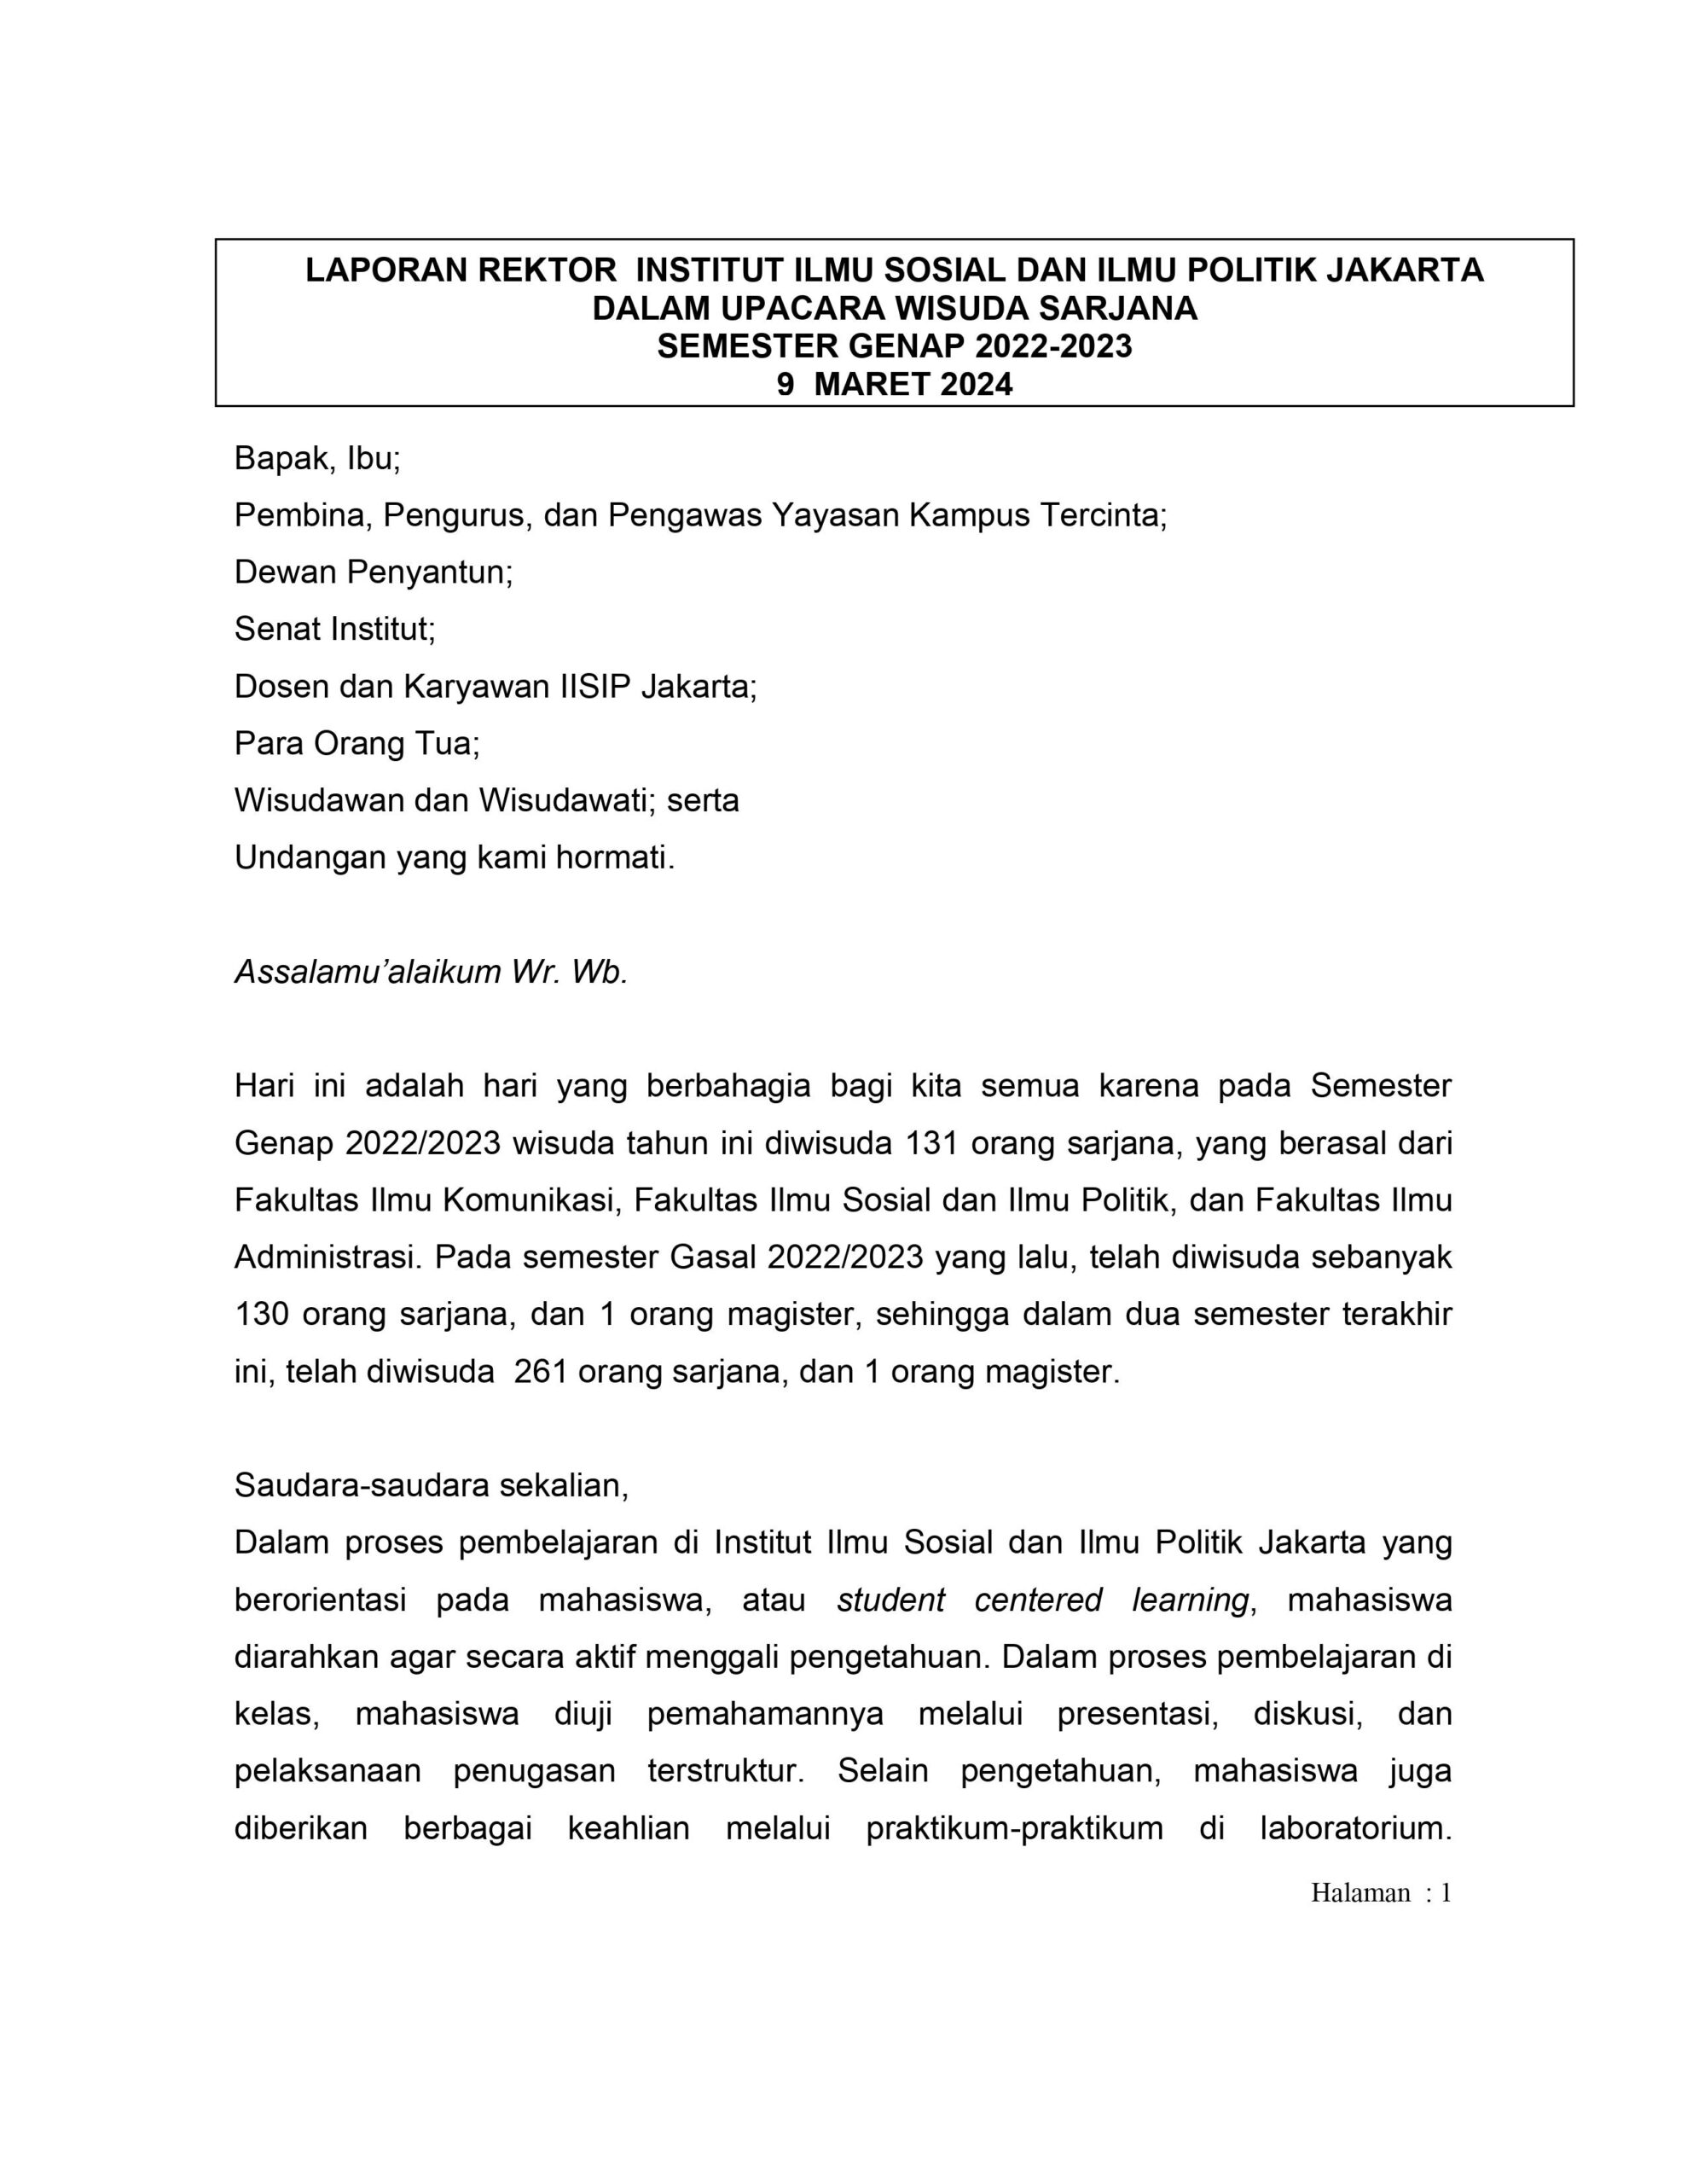 Laporan Rektor IISIP Jakarta Semester Genap 2022-2023